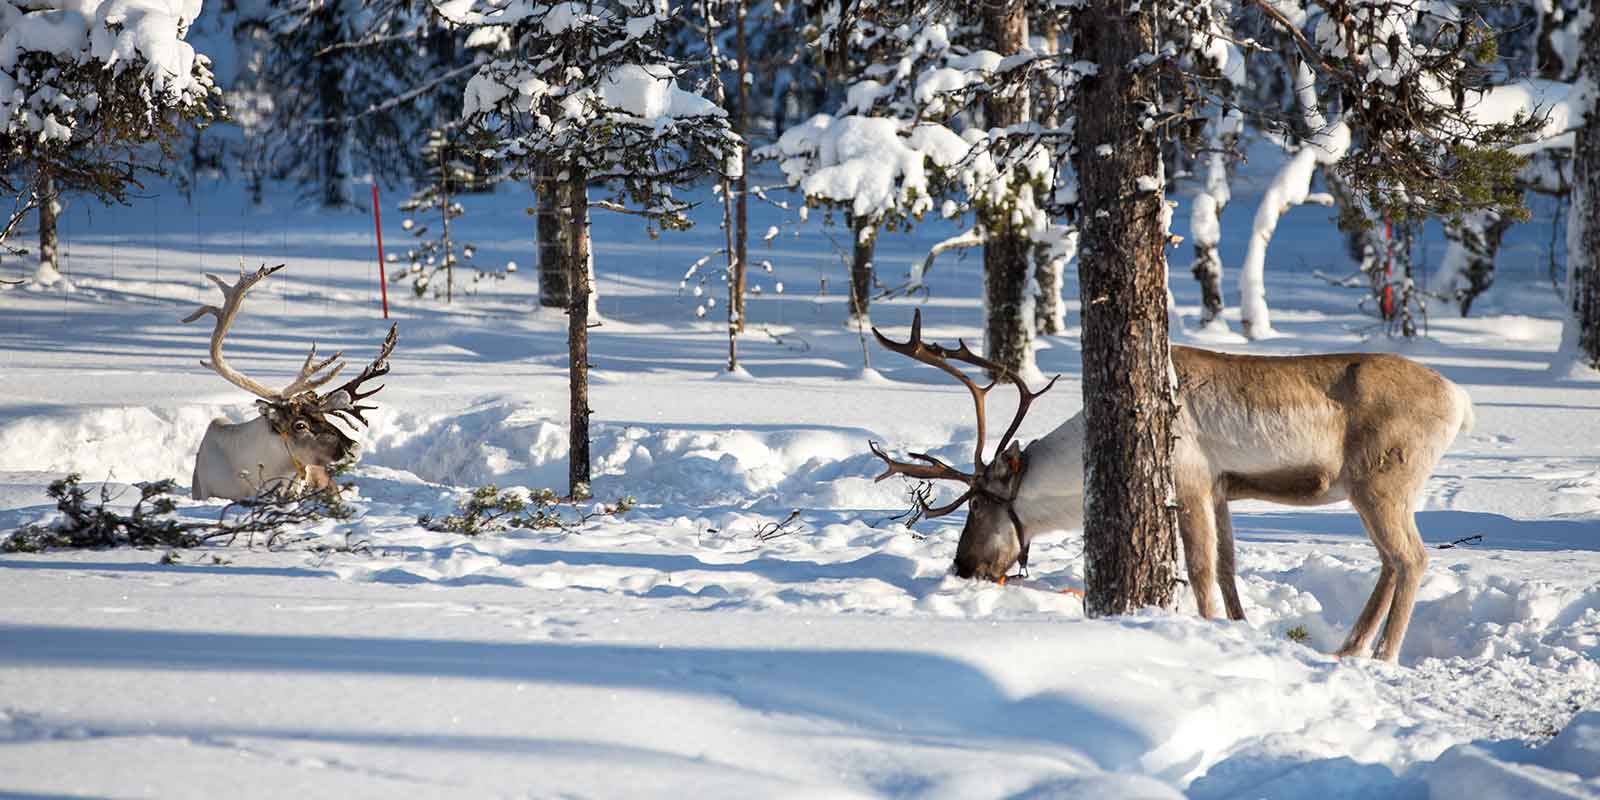 Pair of reindeer in snowy Lapland forest in winter